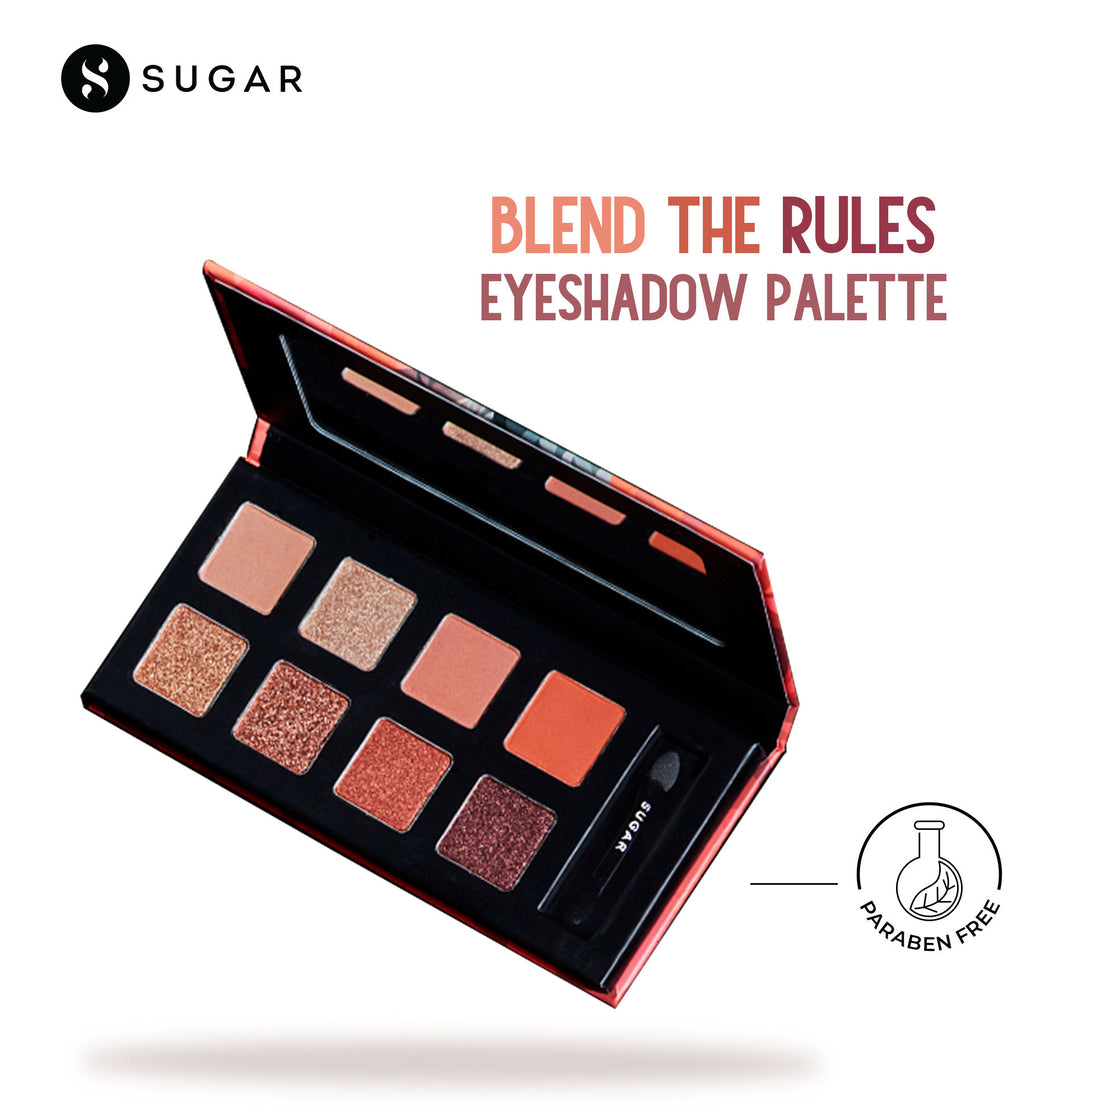 Sugar Blend The Rules Eyeshadow Palette - 03 Fantasy